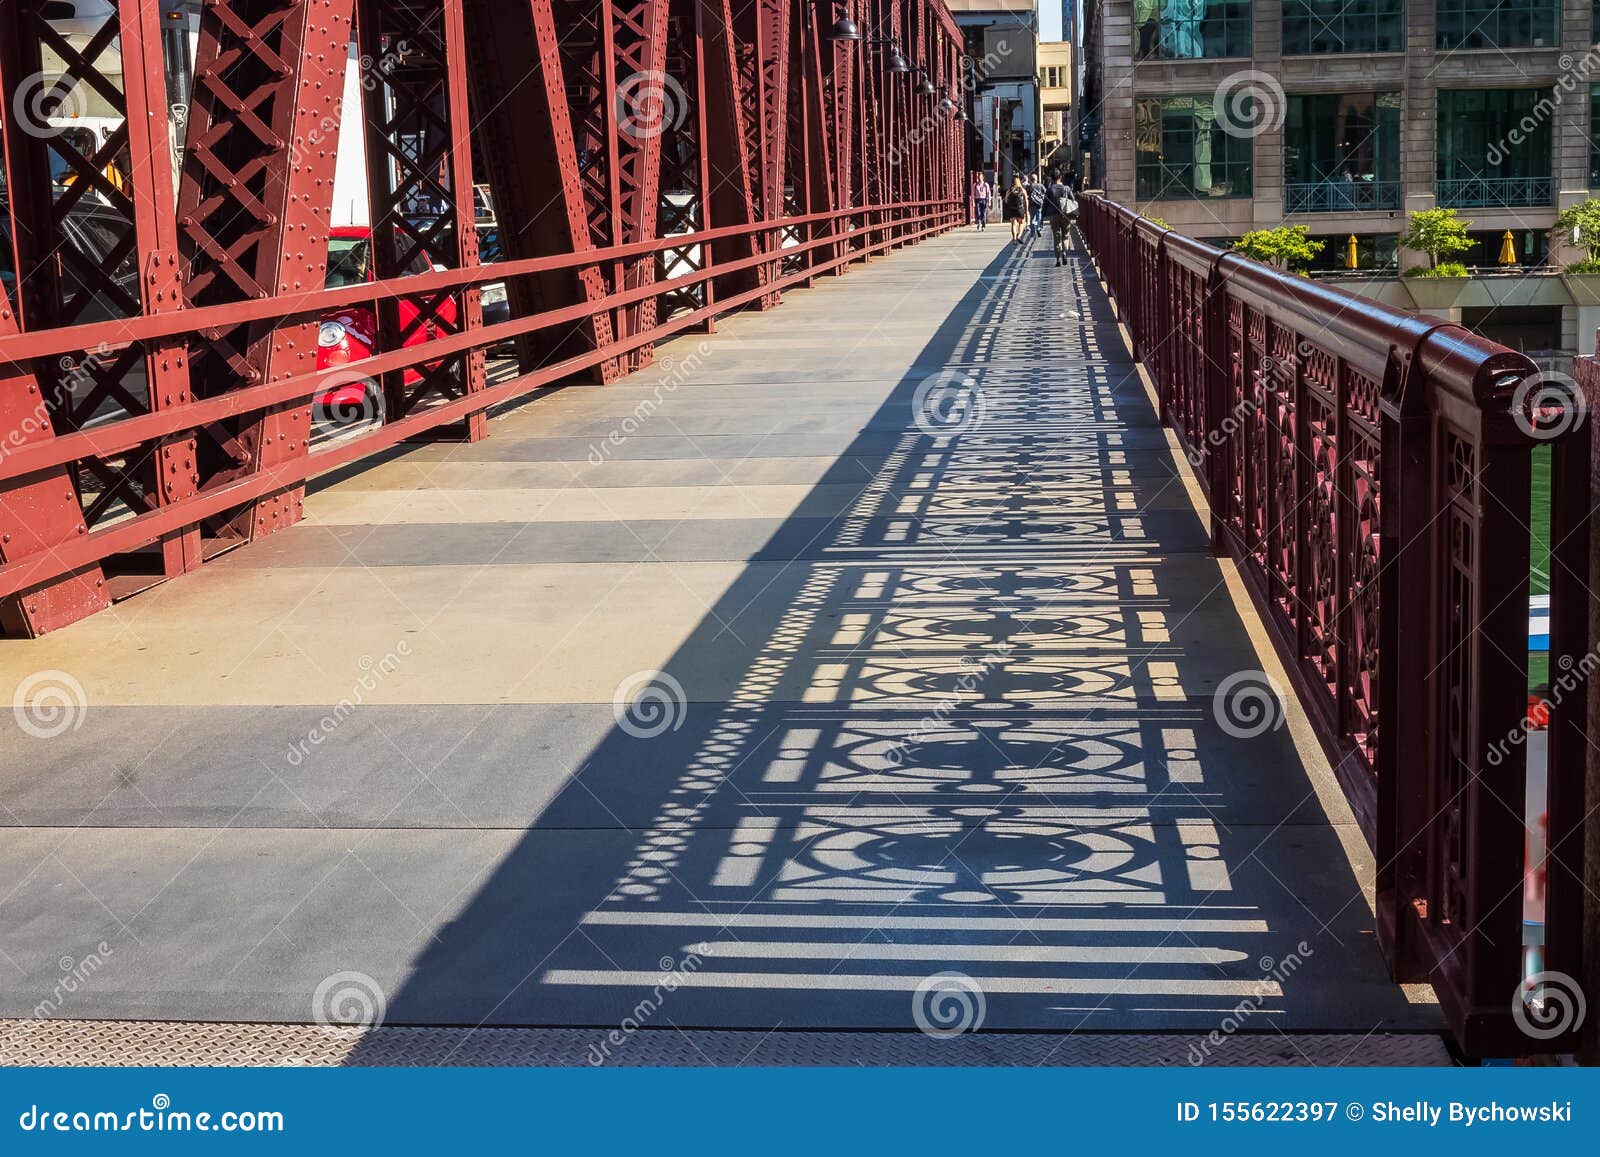 shadows of the bridge railing  on wells street drawbridge in downtown chicago loop